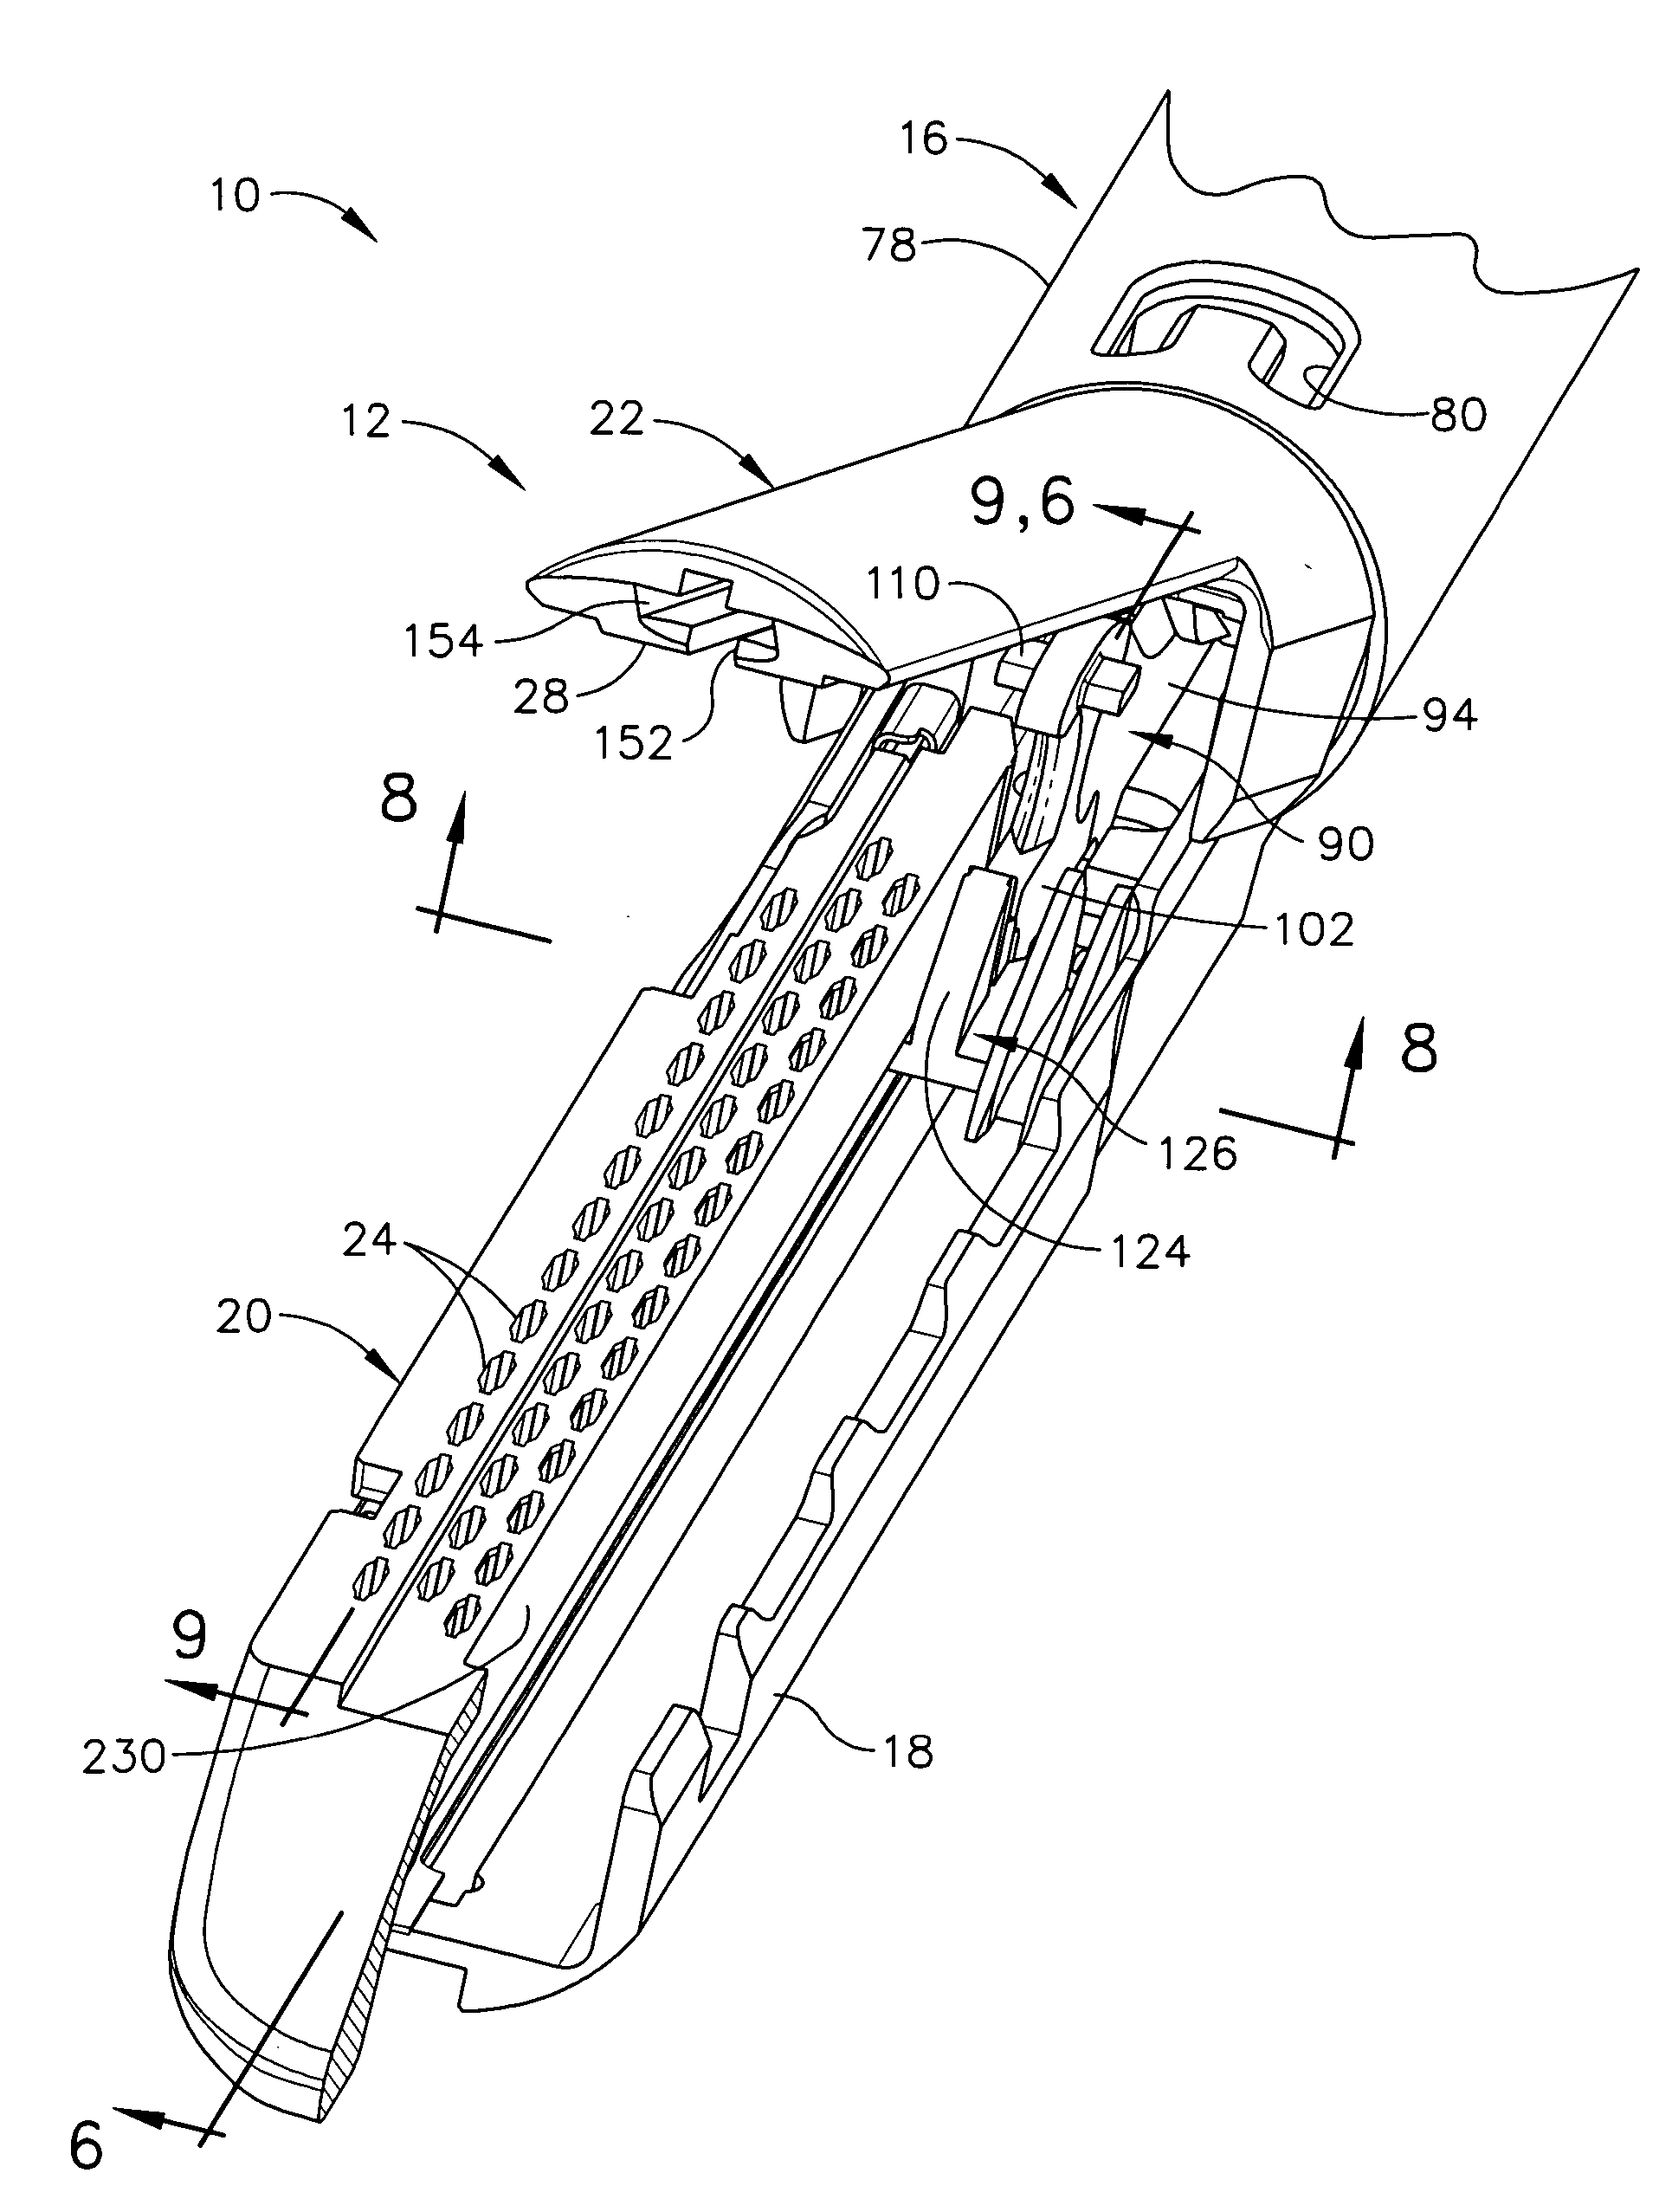 Articulating surgical stapling instrument incorporating a two-piece E-beam firing mechanism